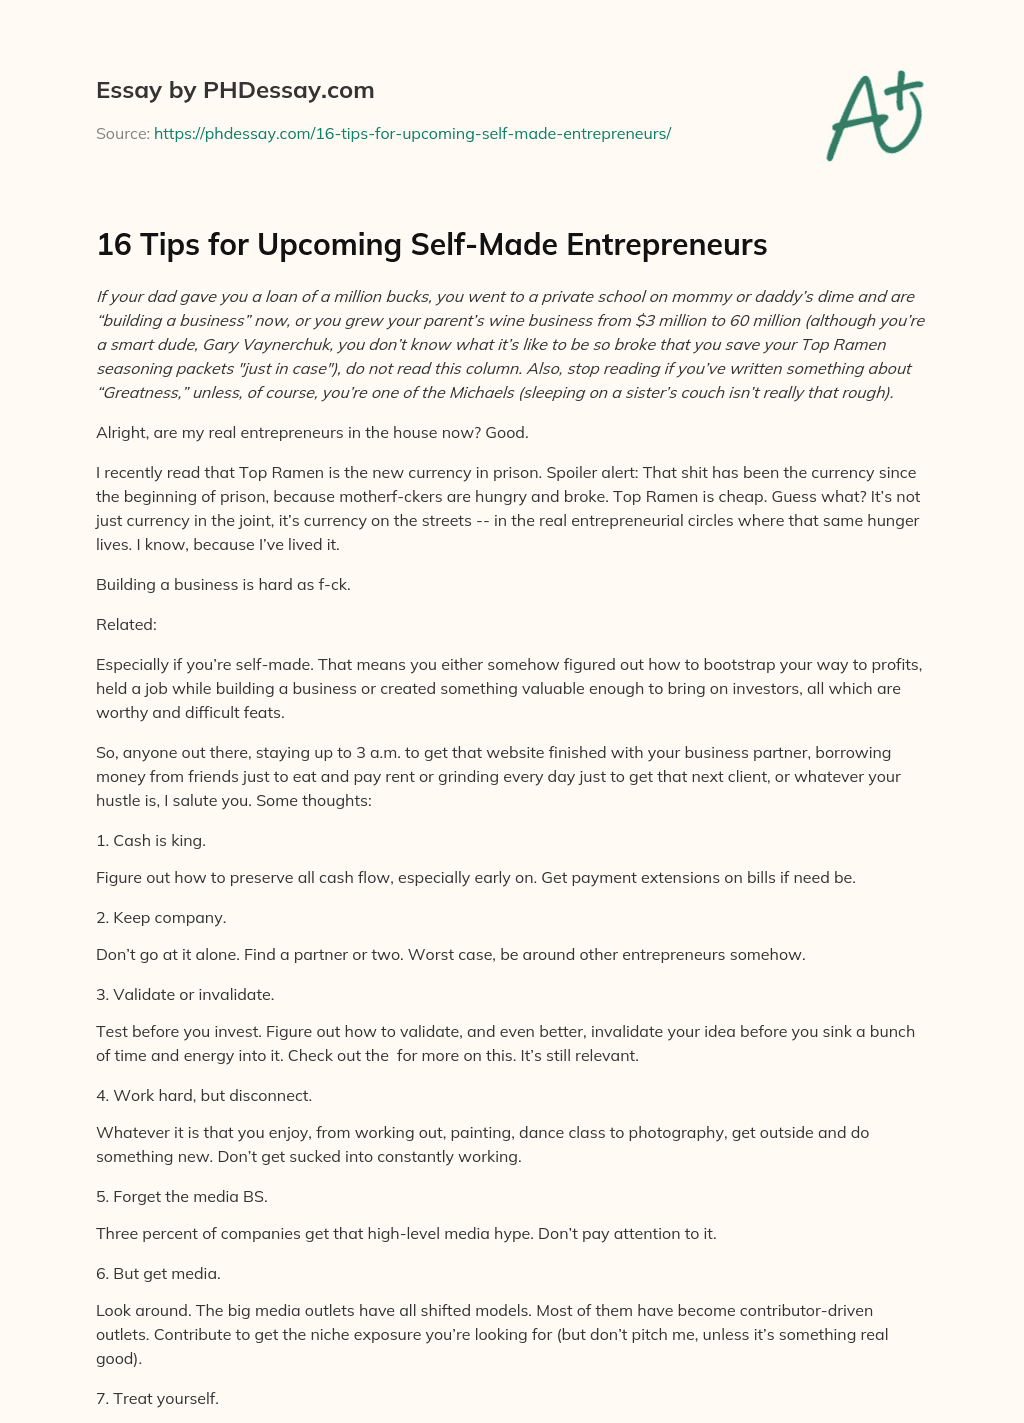 16 Tips for Upcoming Self-Made Entrepreneurs essay